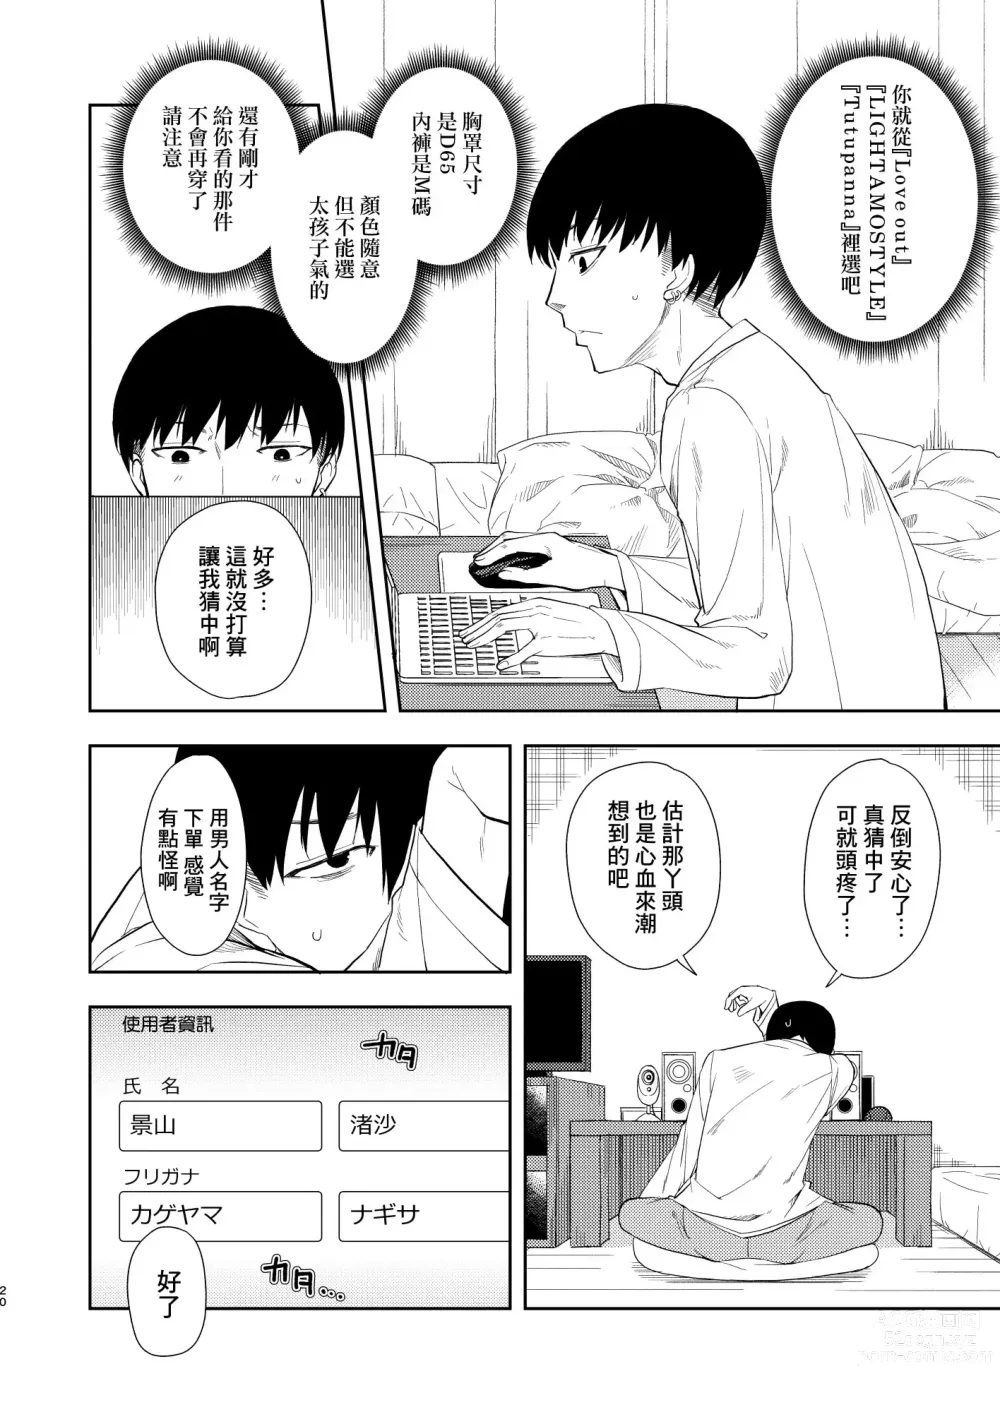 Page 22 of doujinshi Nagisa Lingerie